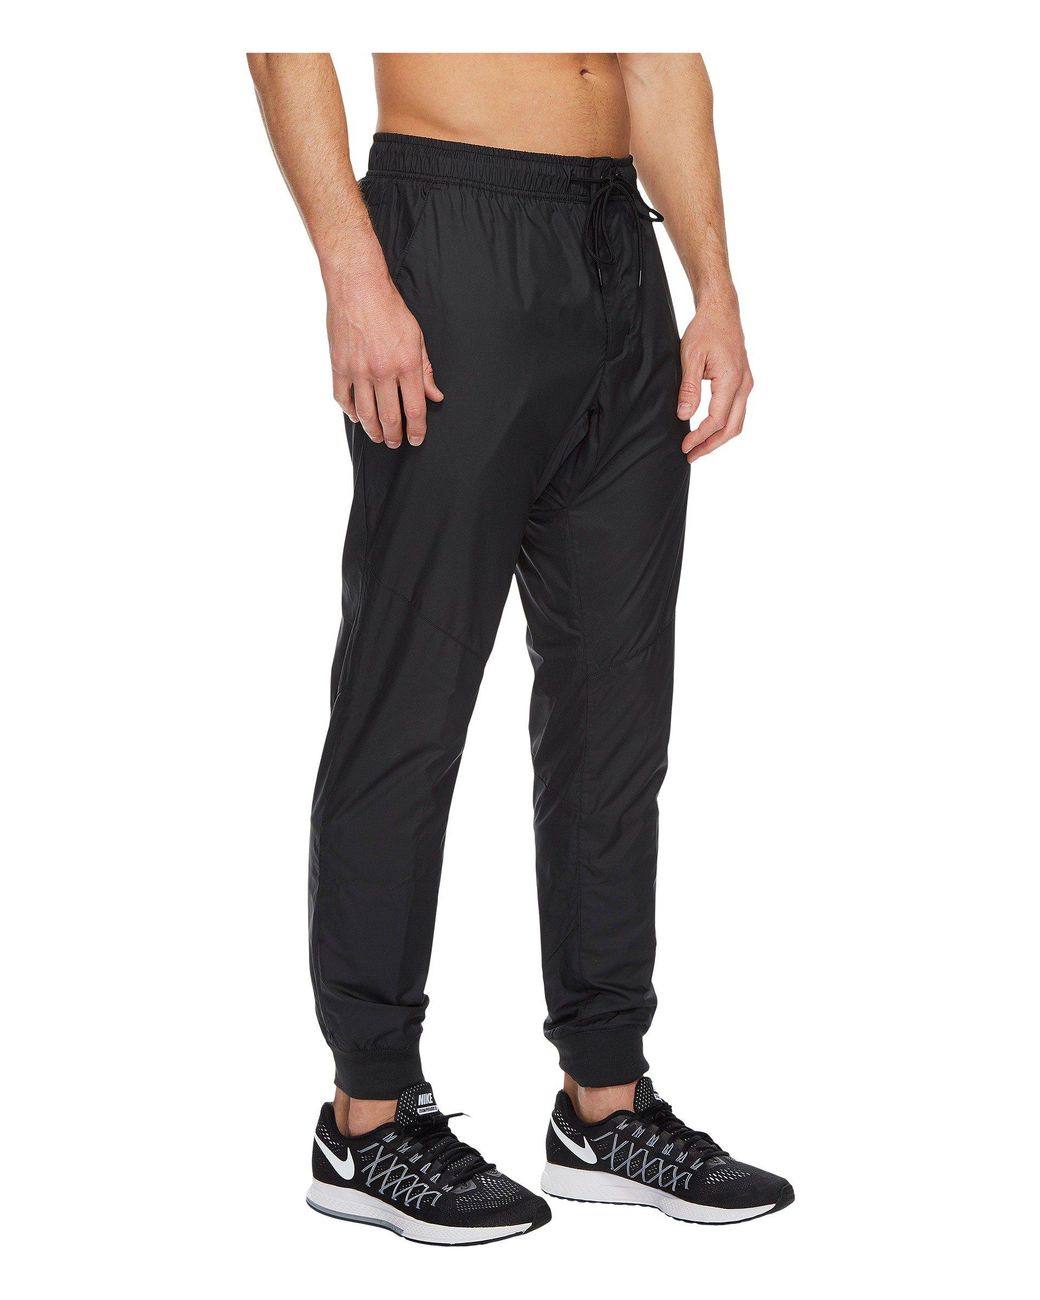 Men's Nike Wind Pants Black Size L | eBay